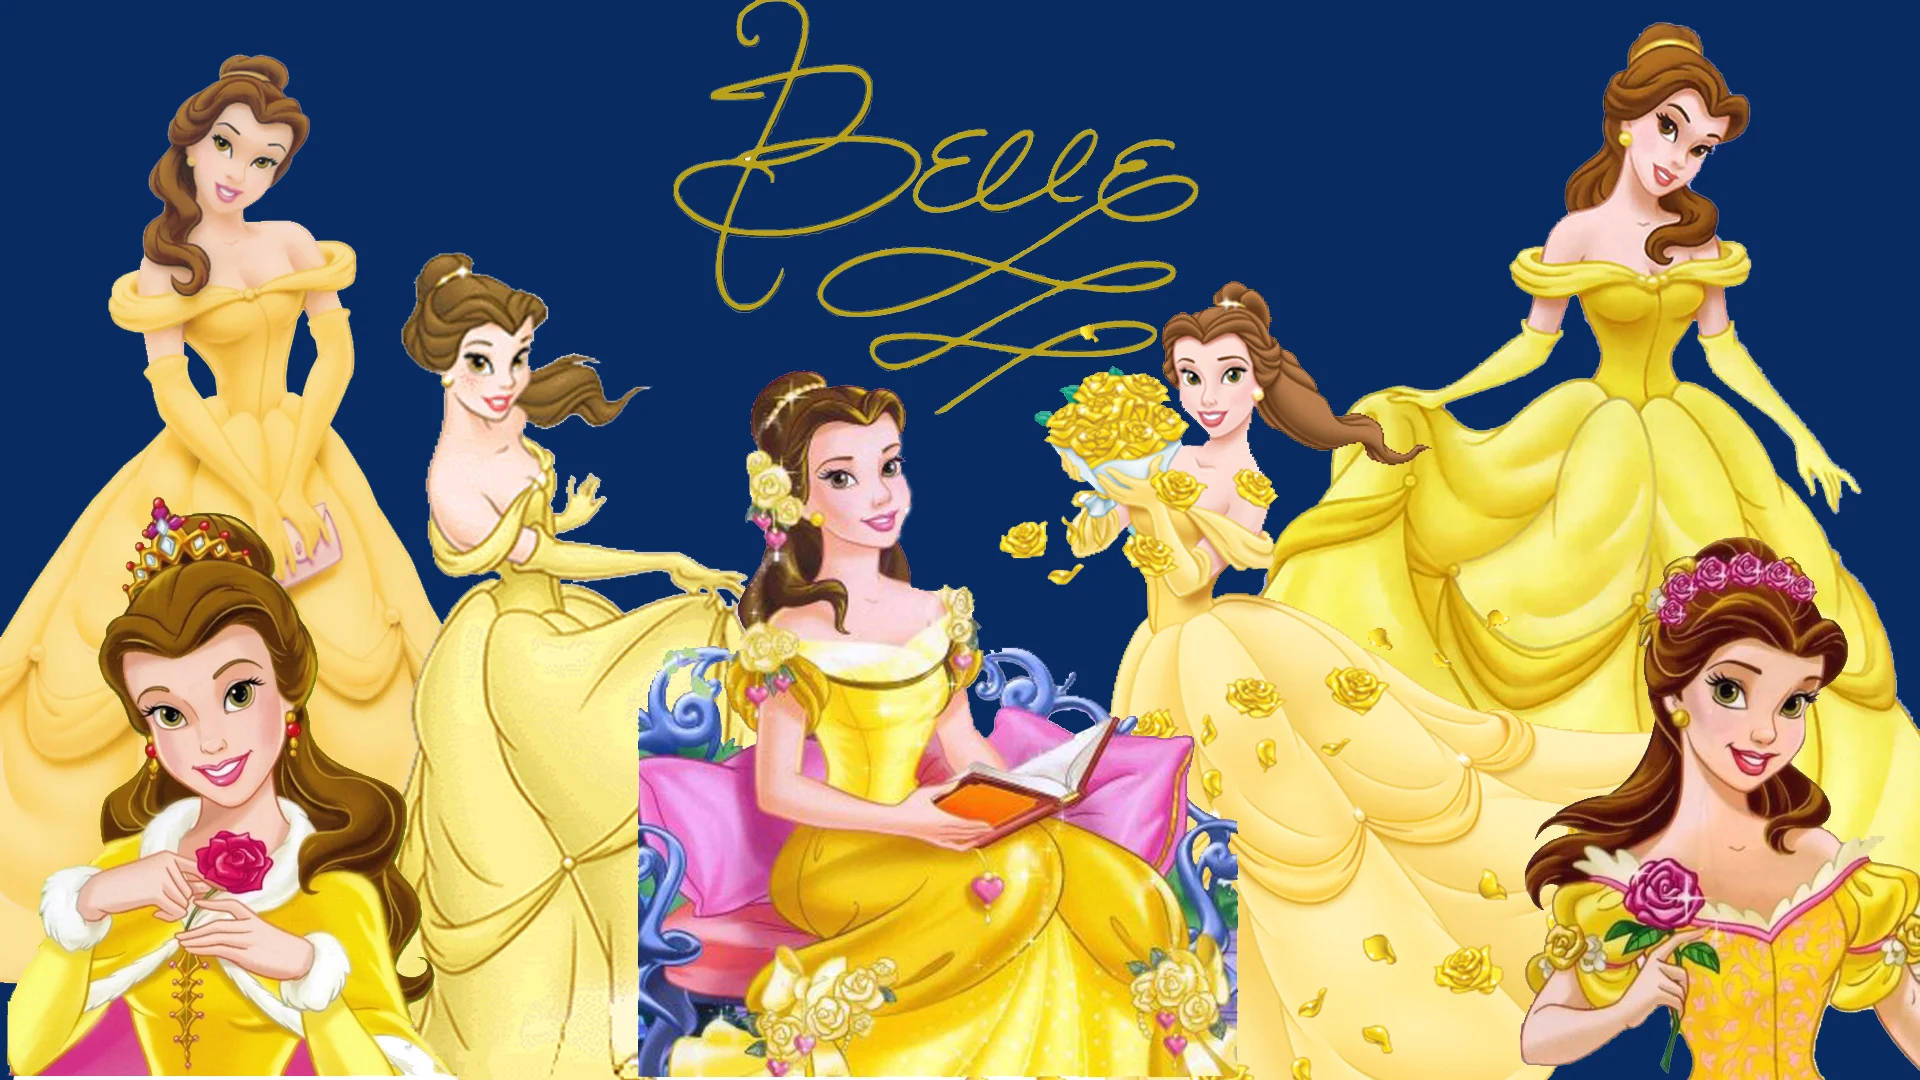 Disney Character Belle Wallpaper